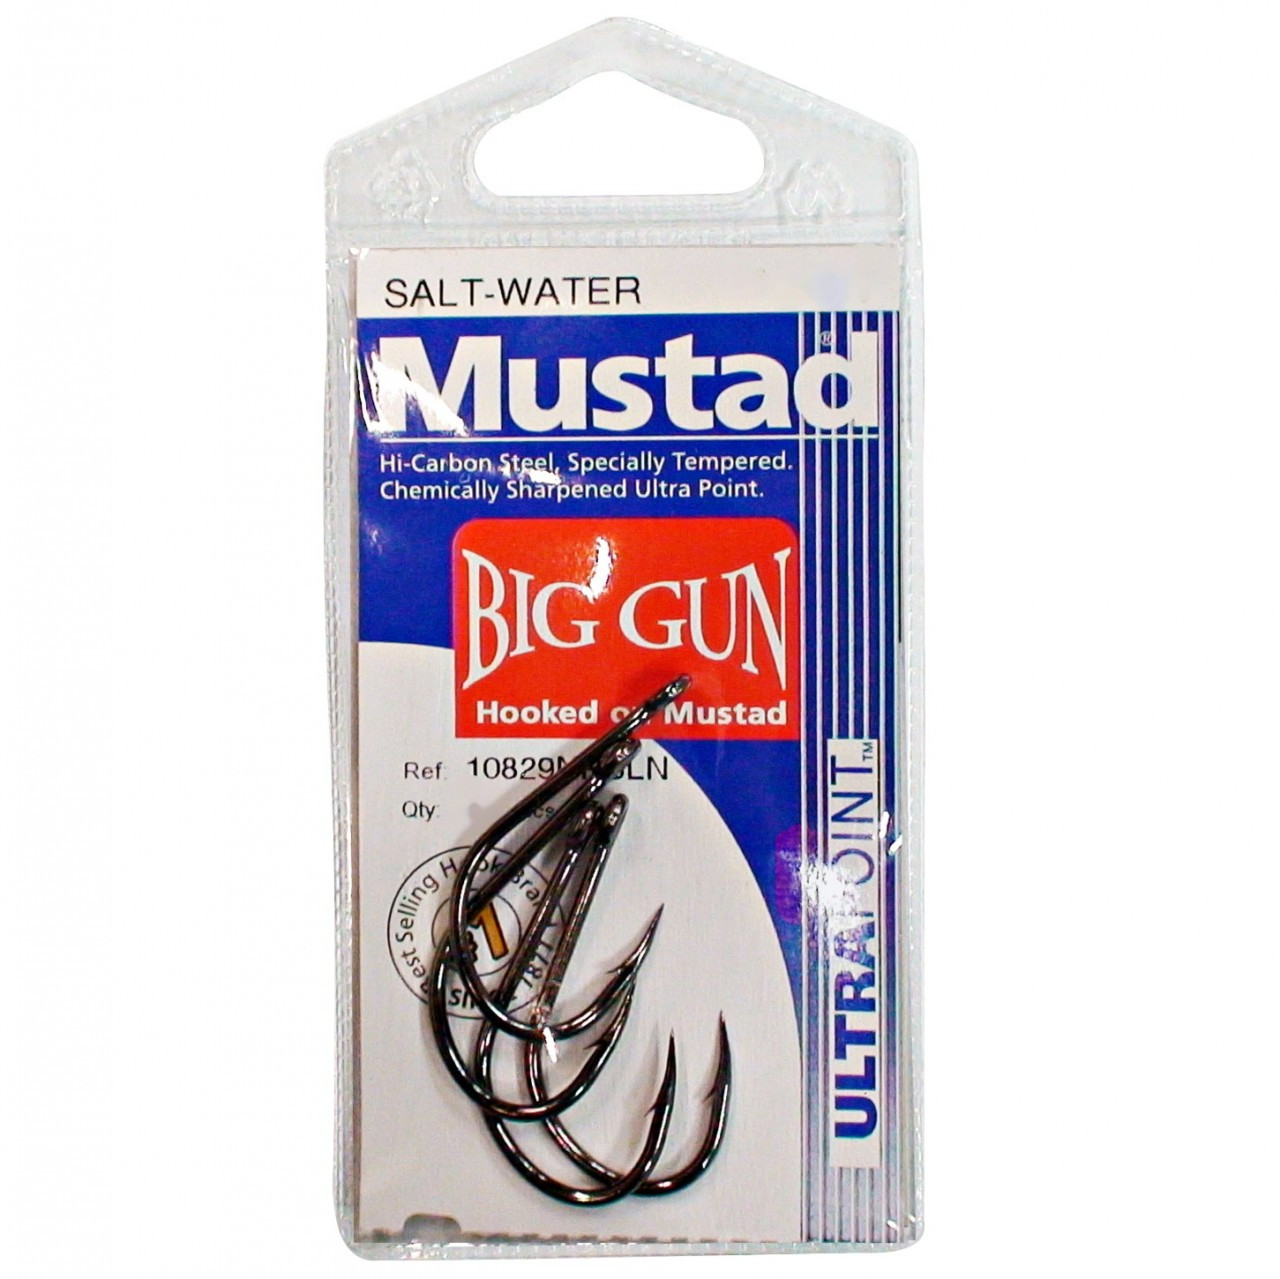 Mustad Ganged Hooks 5 / 0 3 Pack